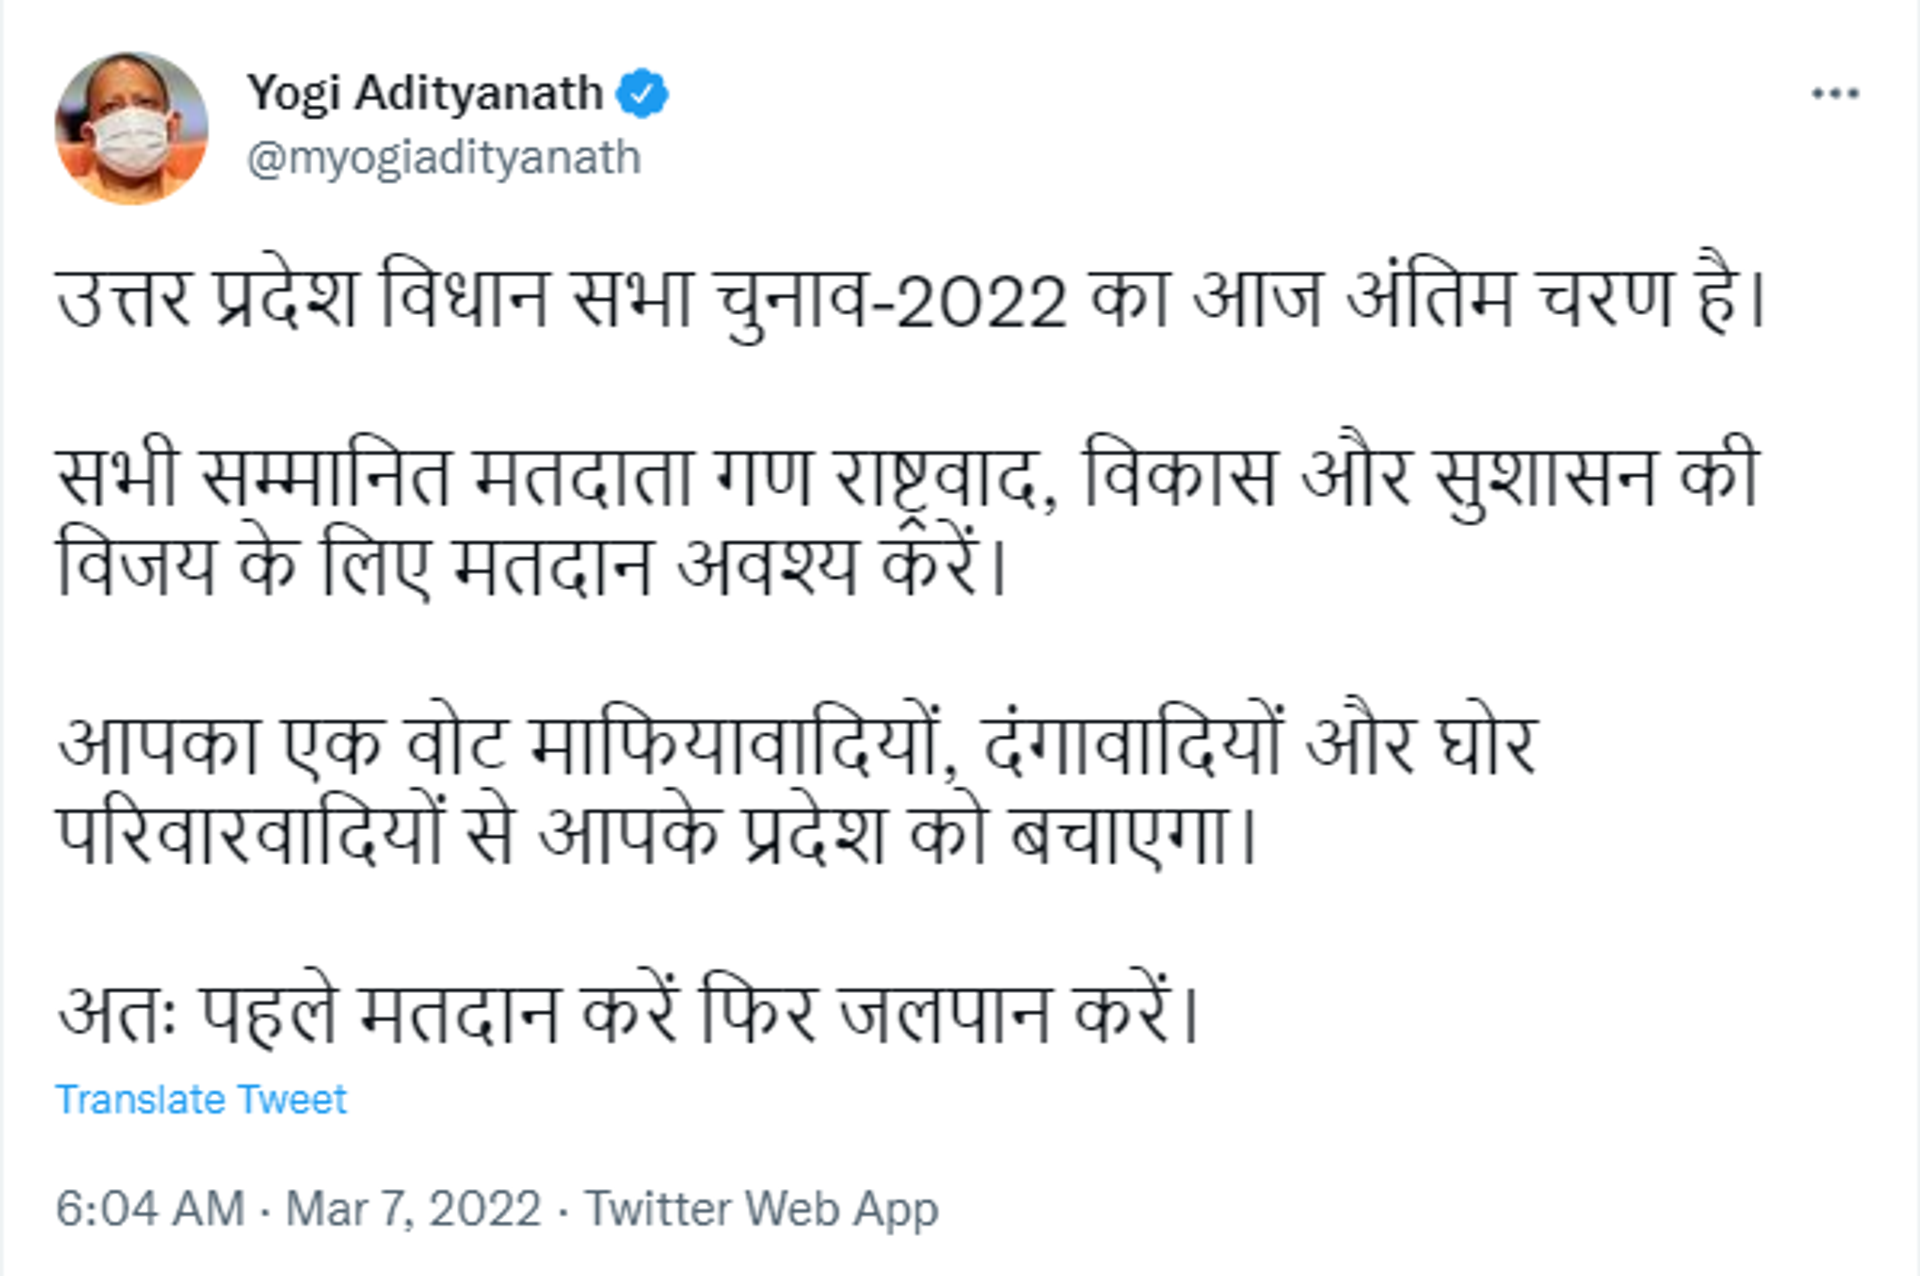 Uttar Pradesh State Chief Yogi Adityanath Urges Voters to Vote in Huge Numbers in Seventh Phase of Polling - Sputnik International, 1920, 07.03.2022